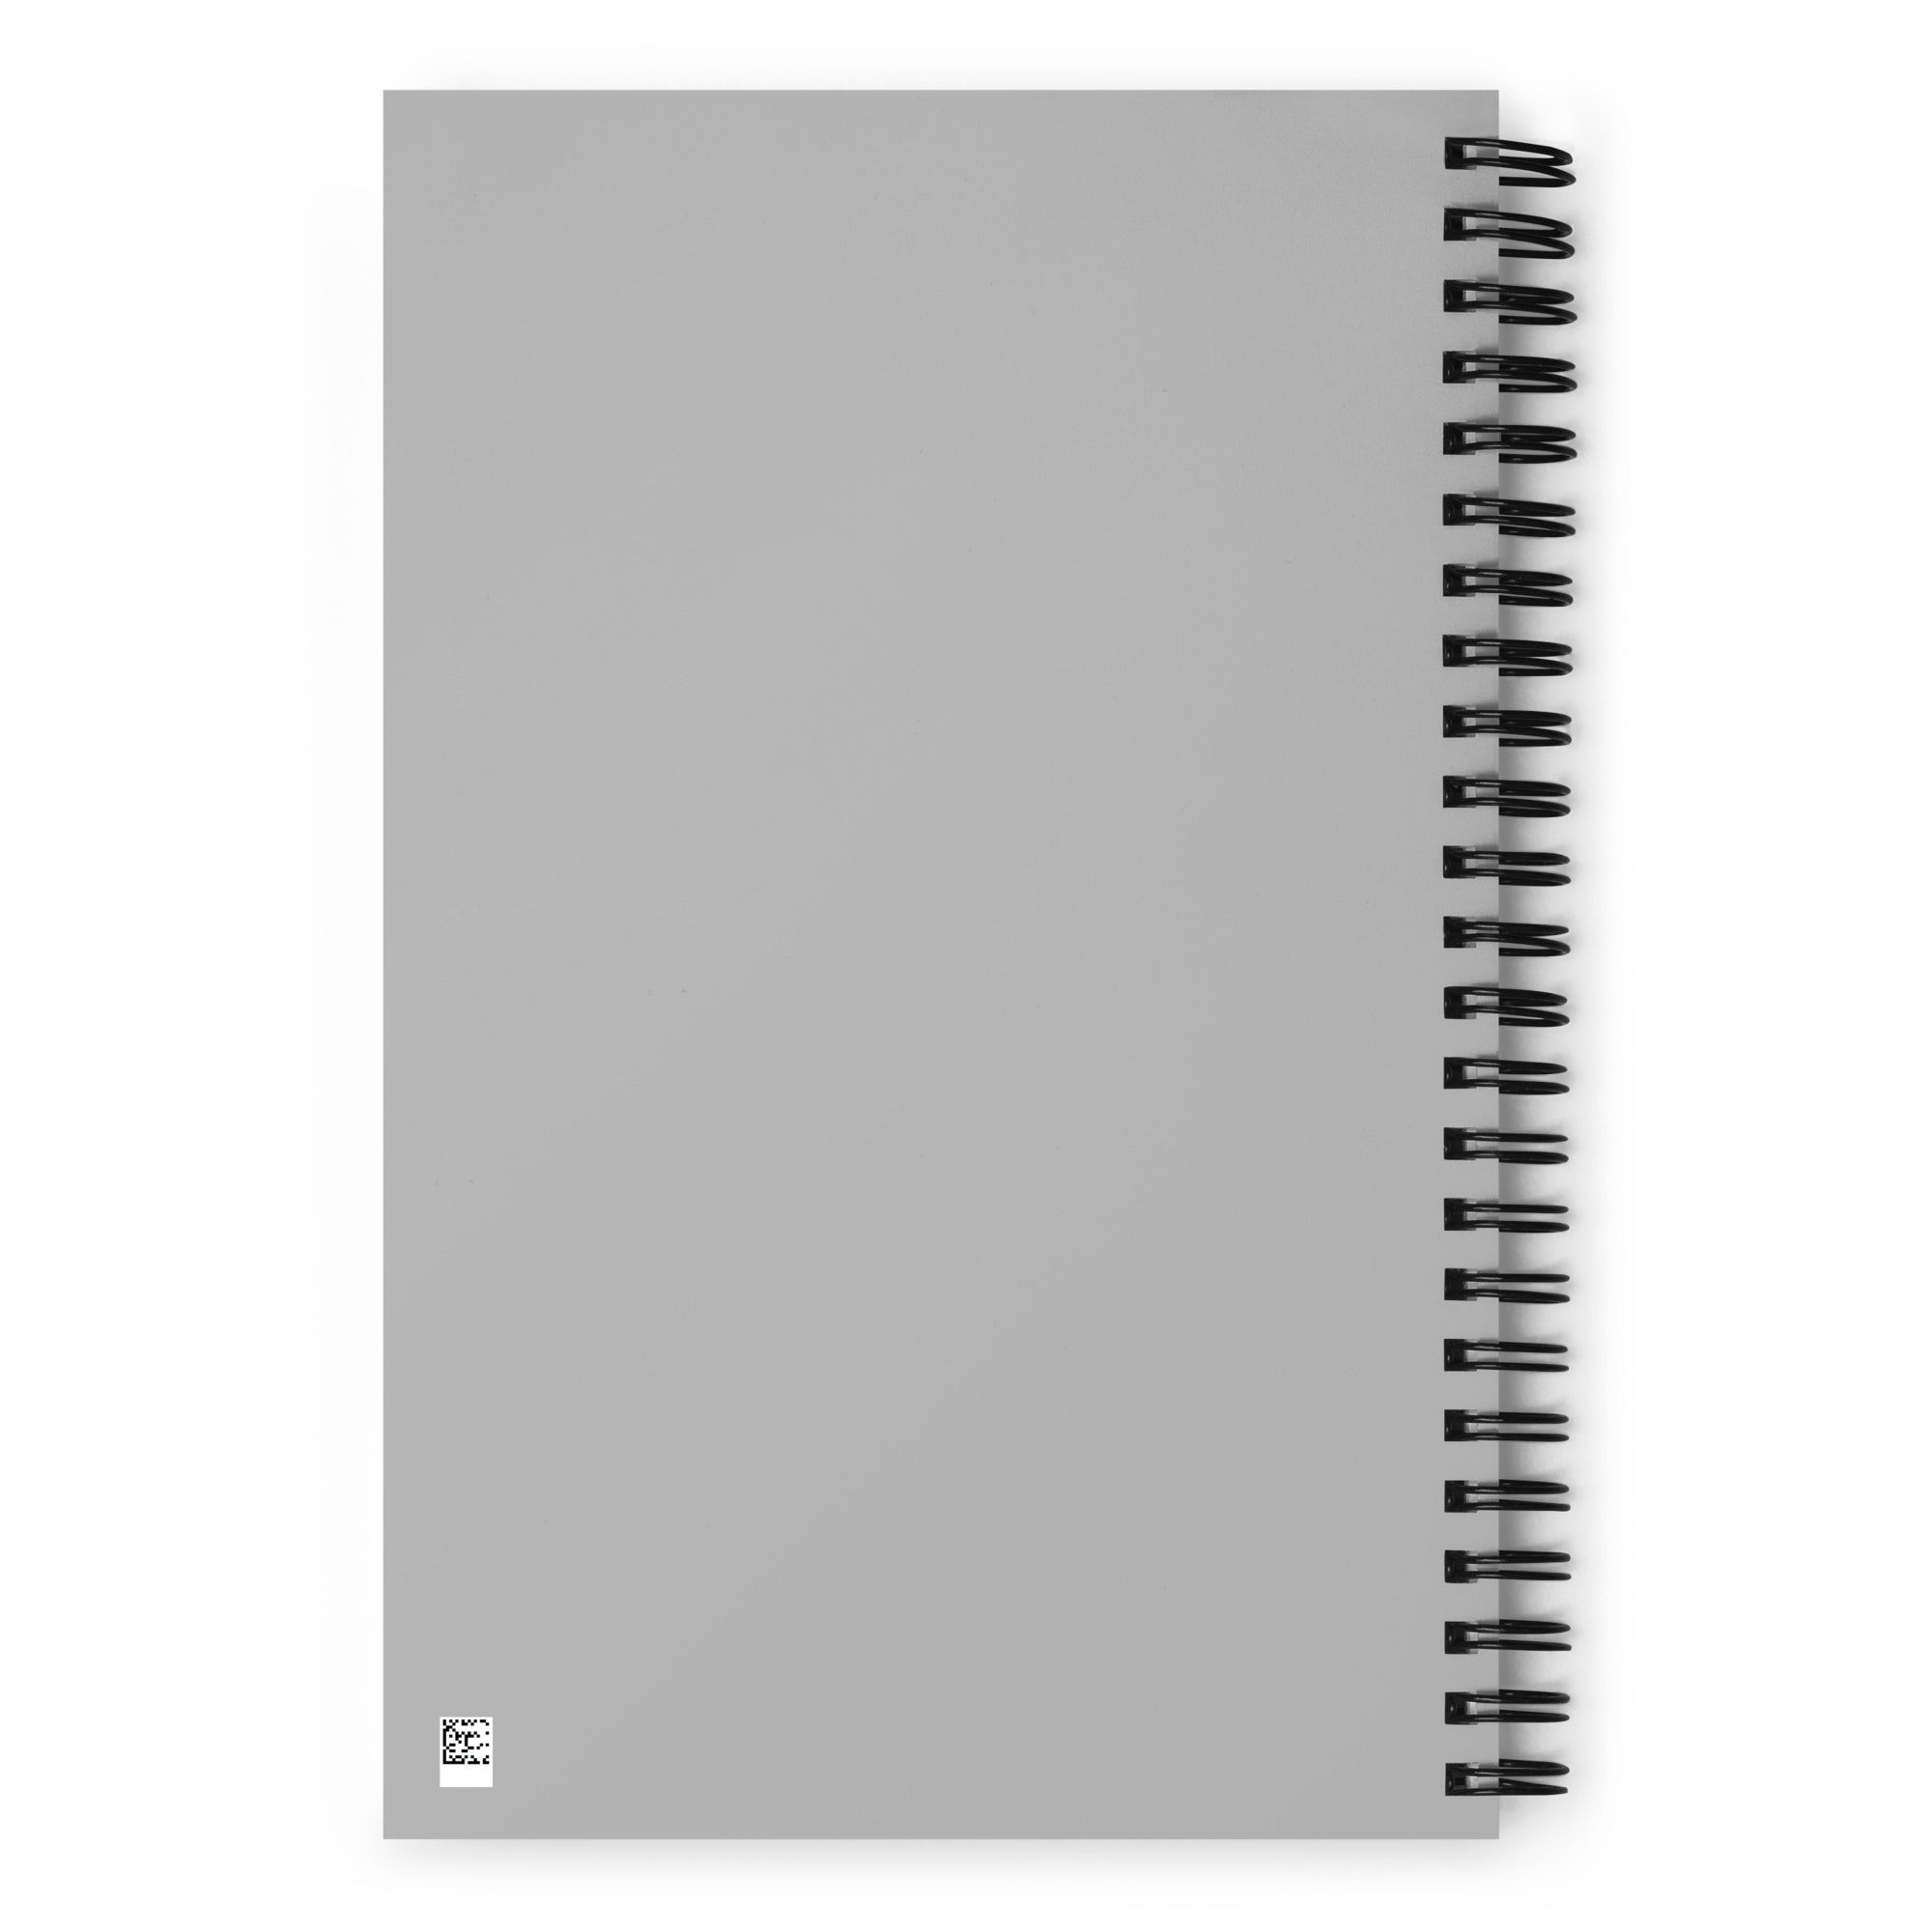 WBOL Spiral notebook